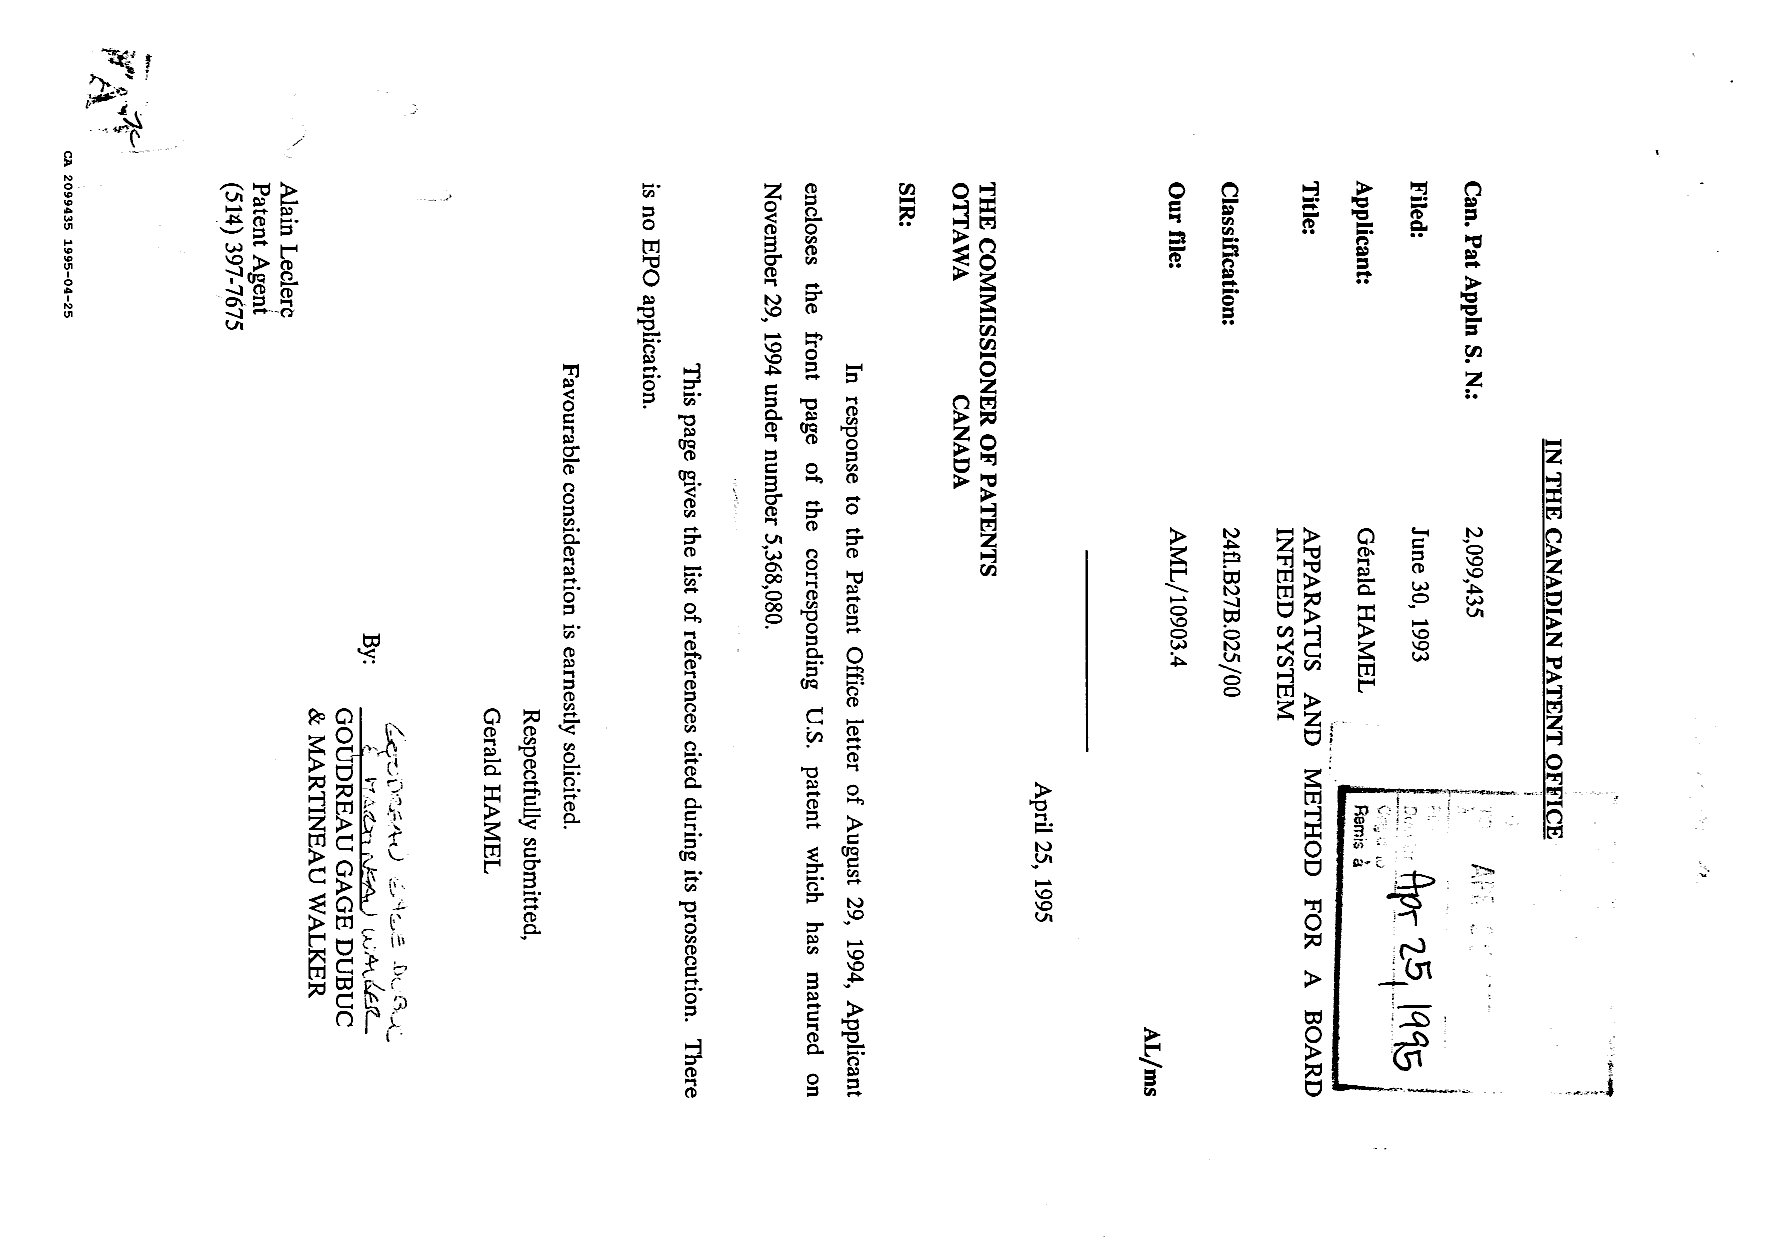 Canadian Patent Document 2099435. Prosecution Correspondence 19950425. Image 1 of 1